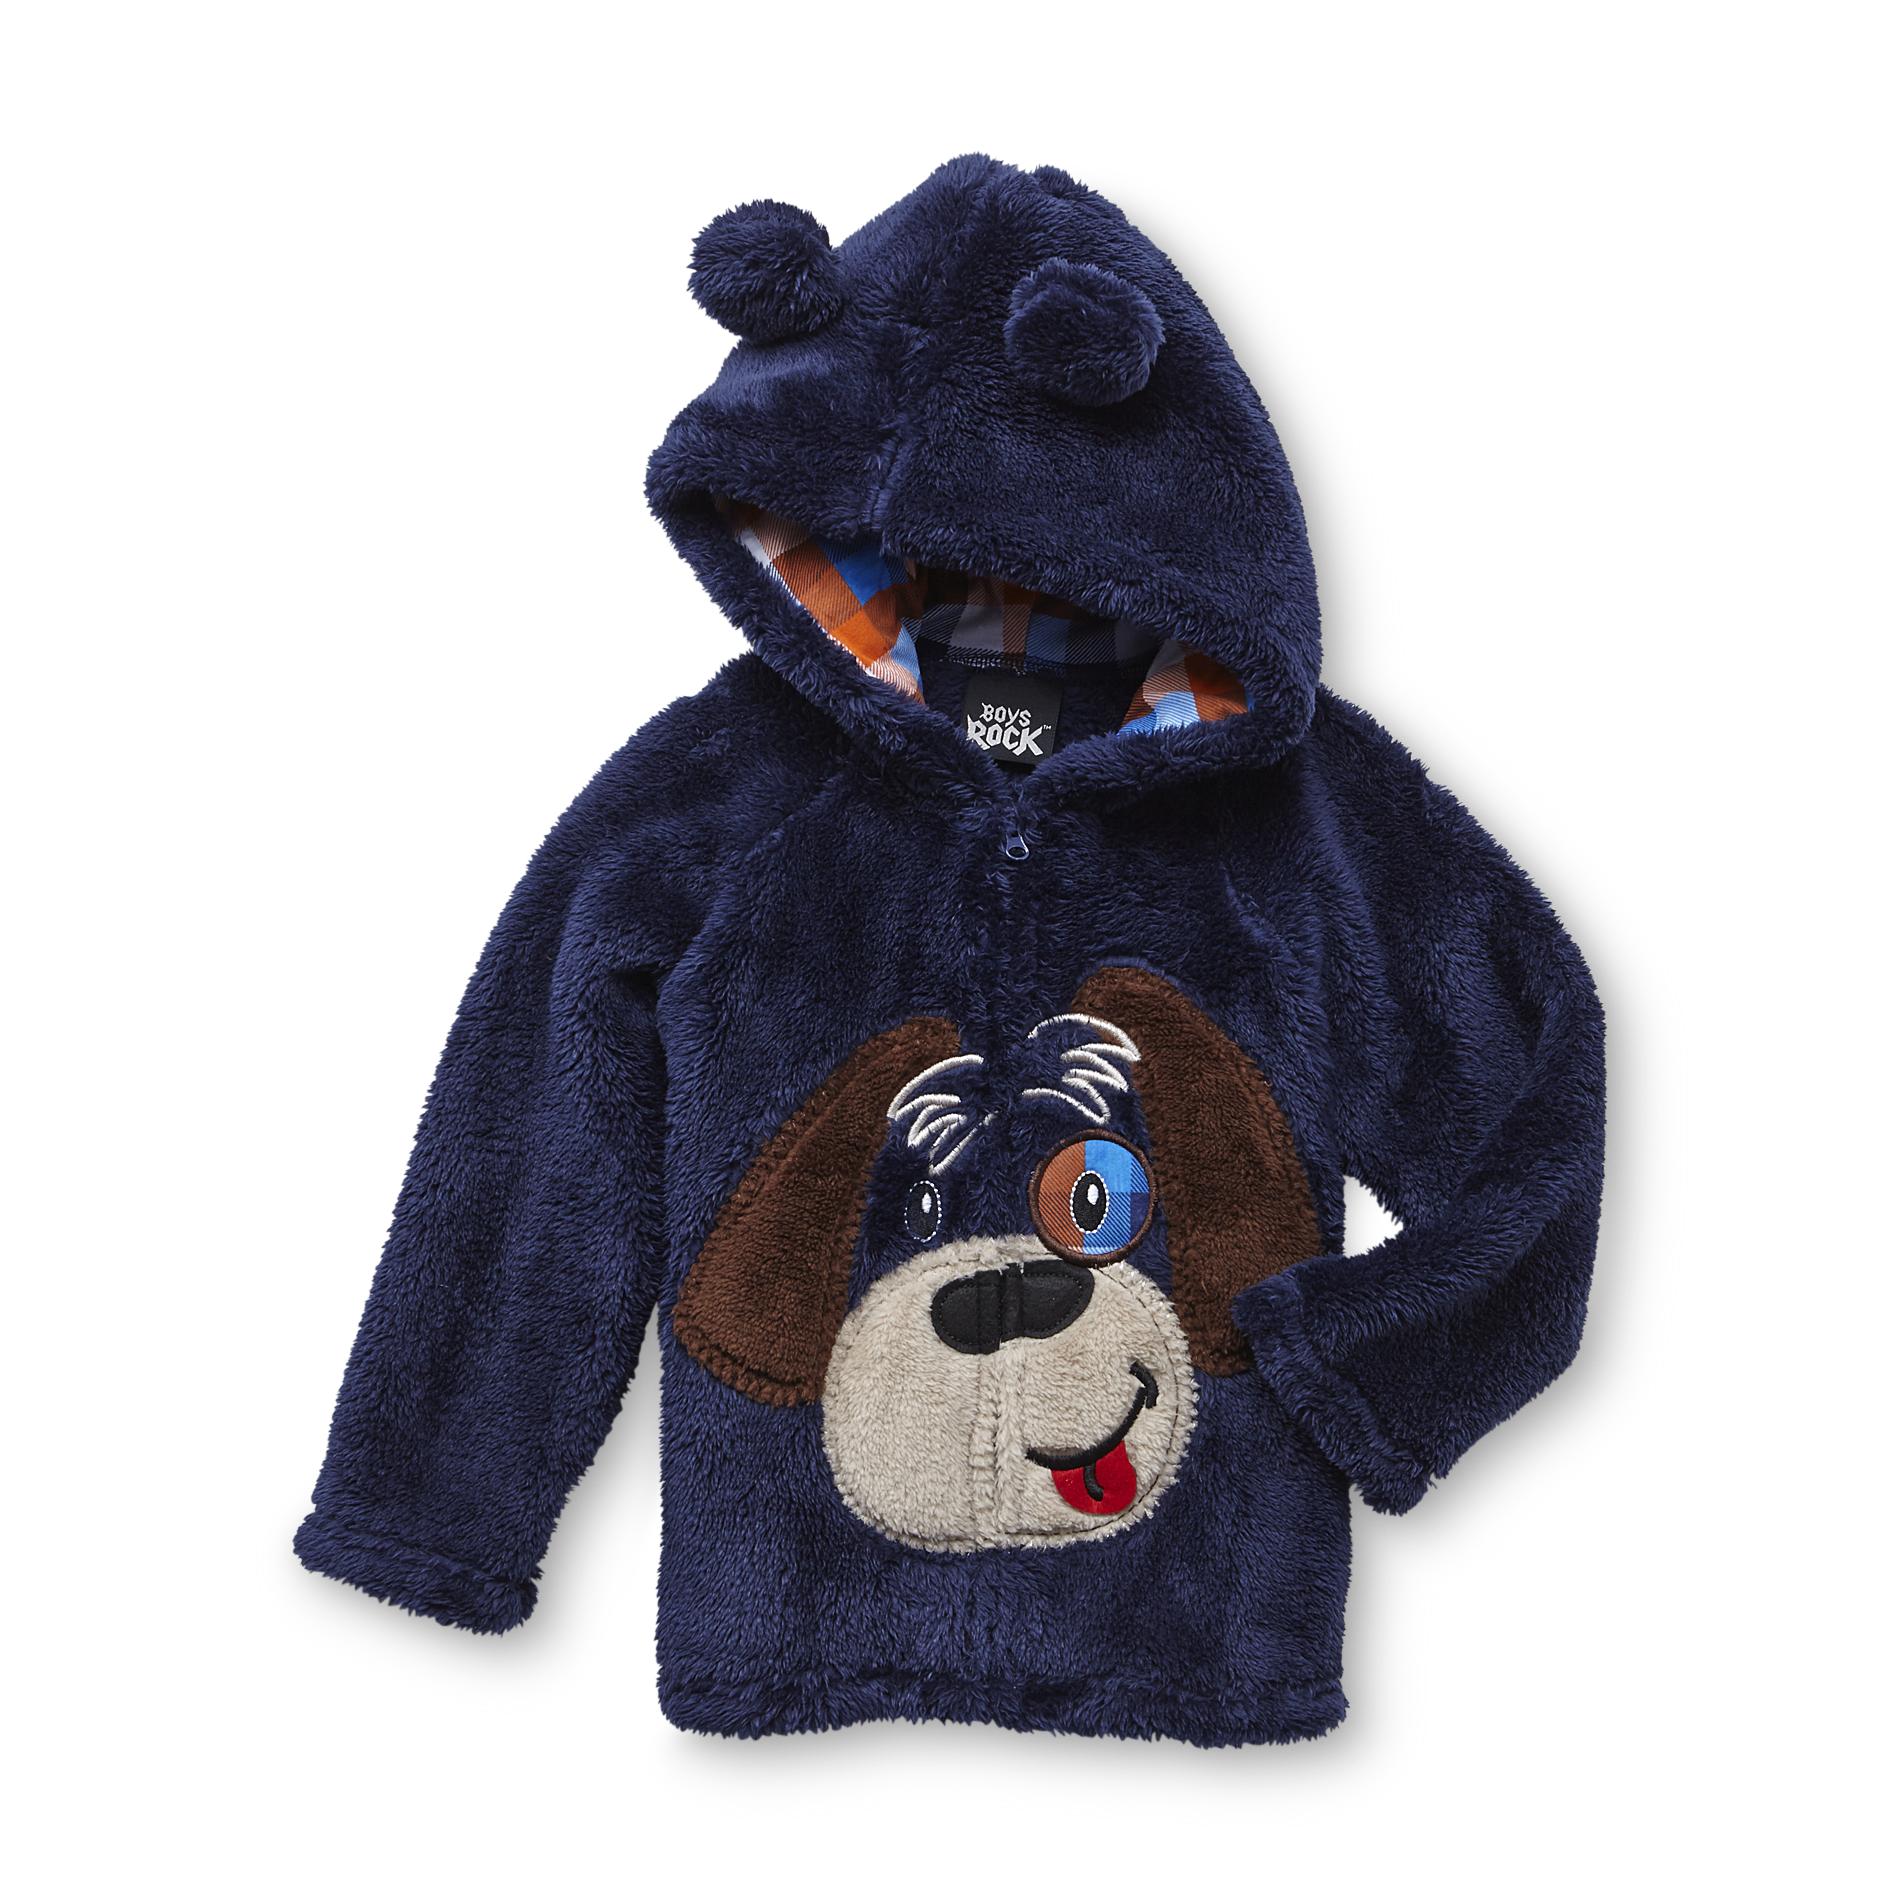 Boys Rock Infant & Toddler Boy's Plush Hoodie Jacket - Dog